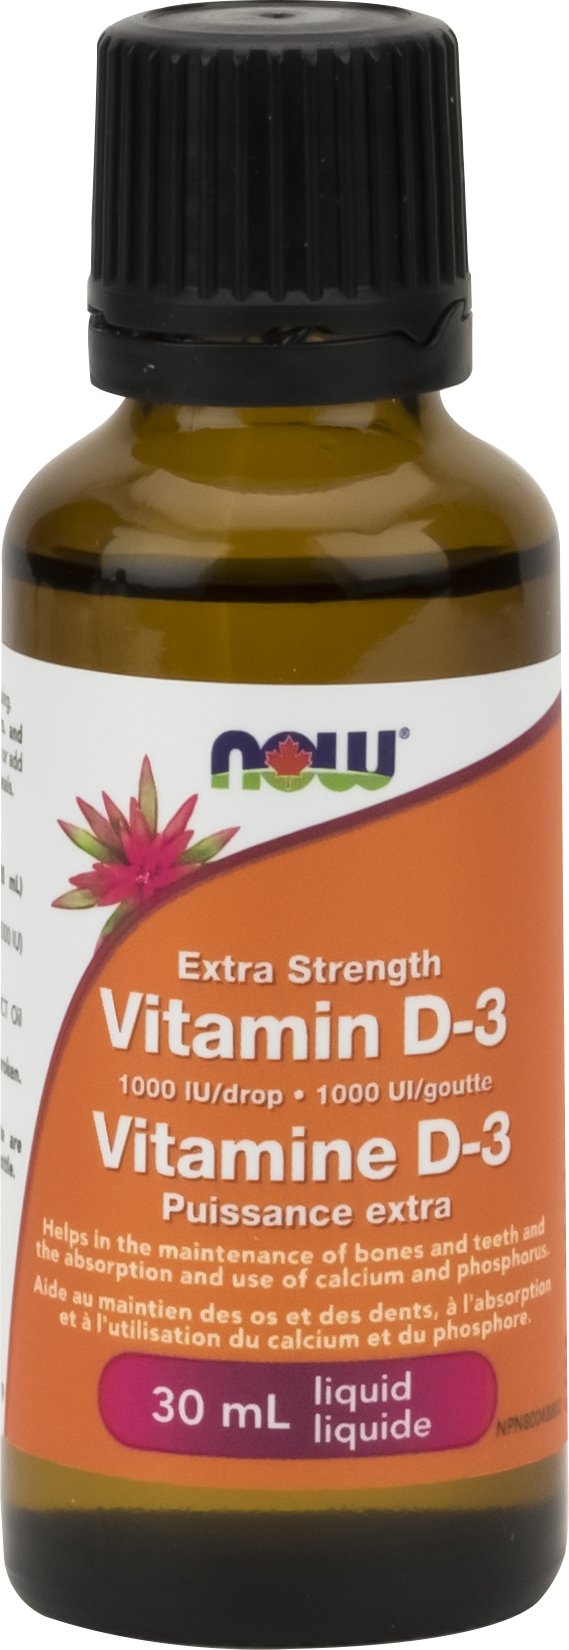 NOW Vitamin D-3 Extra Strength 1000 IU 30 mL Image 1